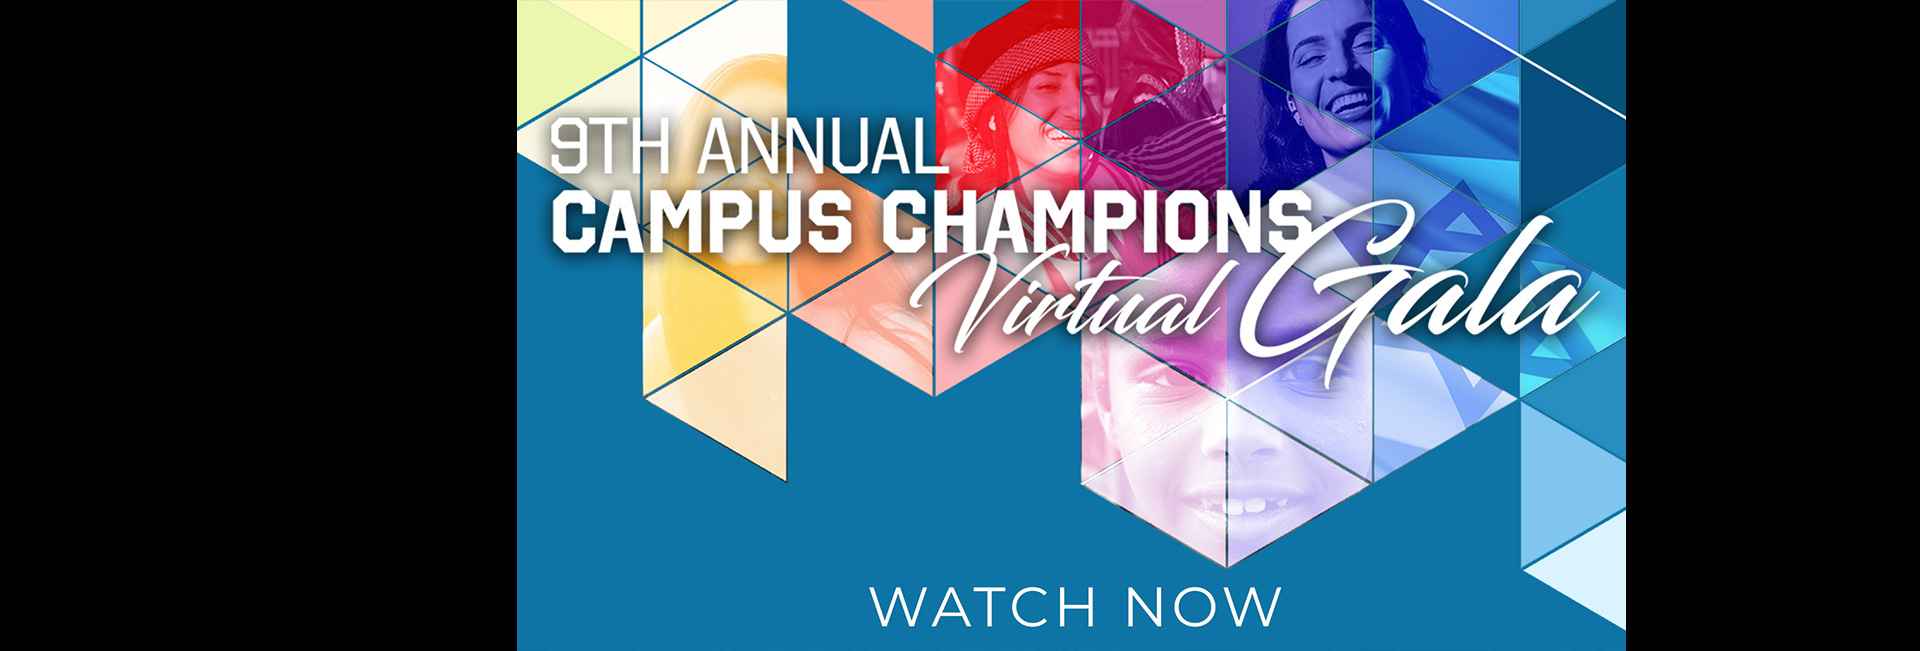 Campus Champions Virtual Gala